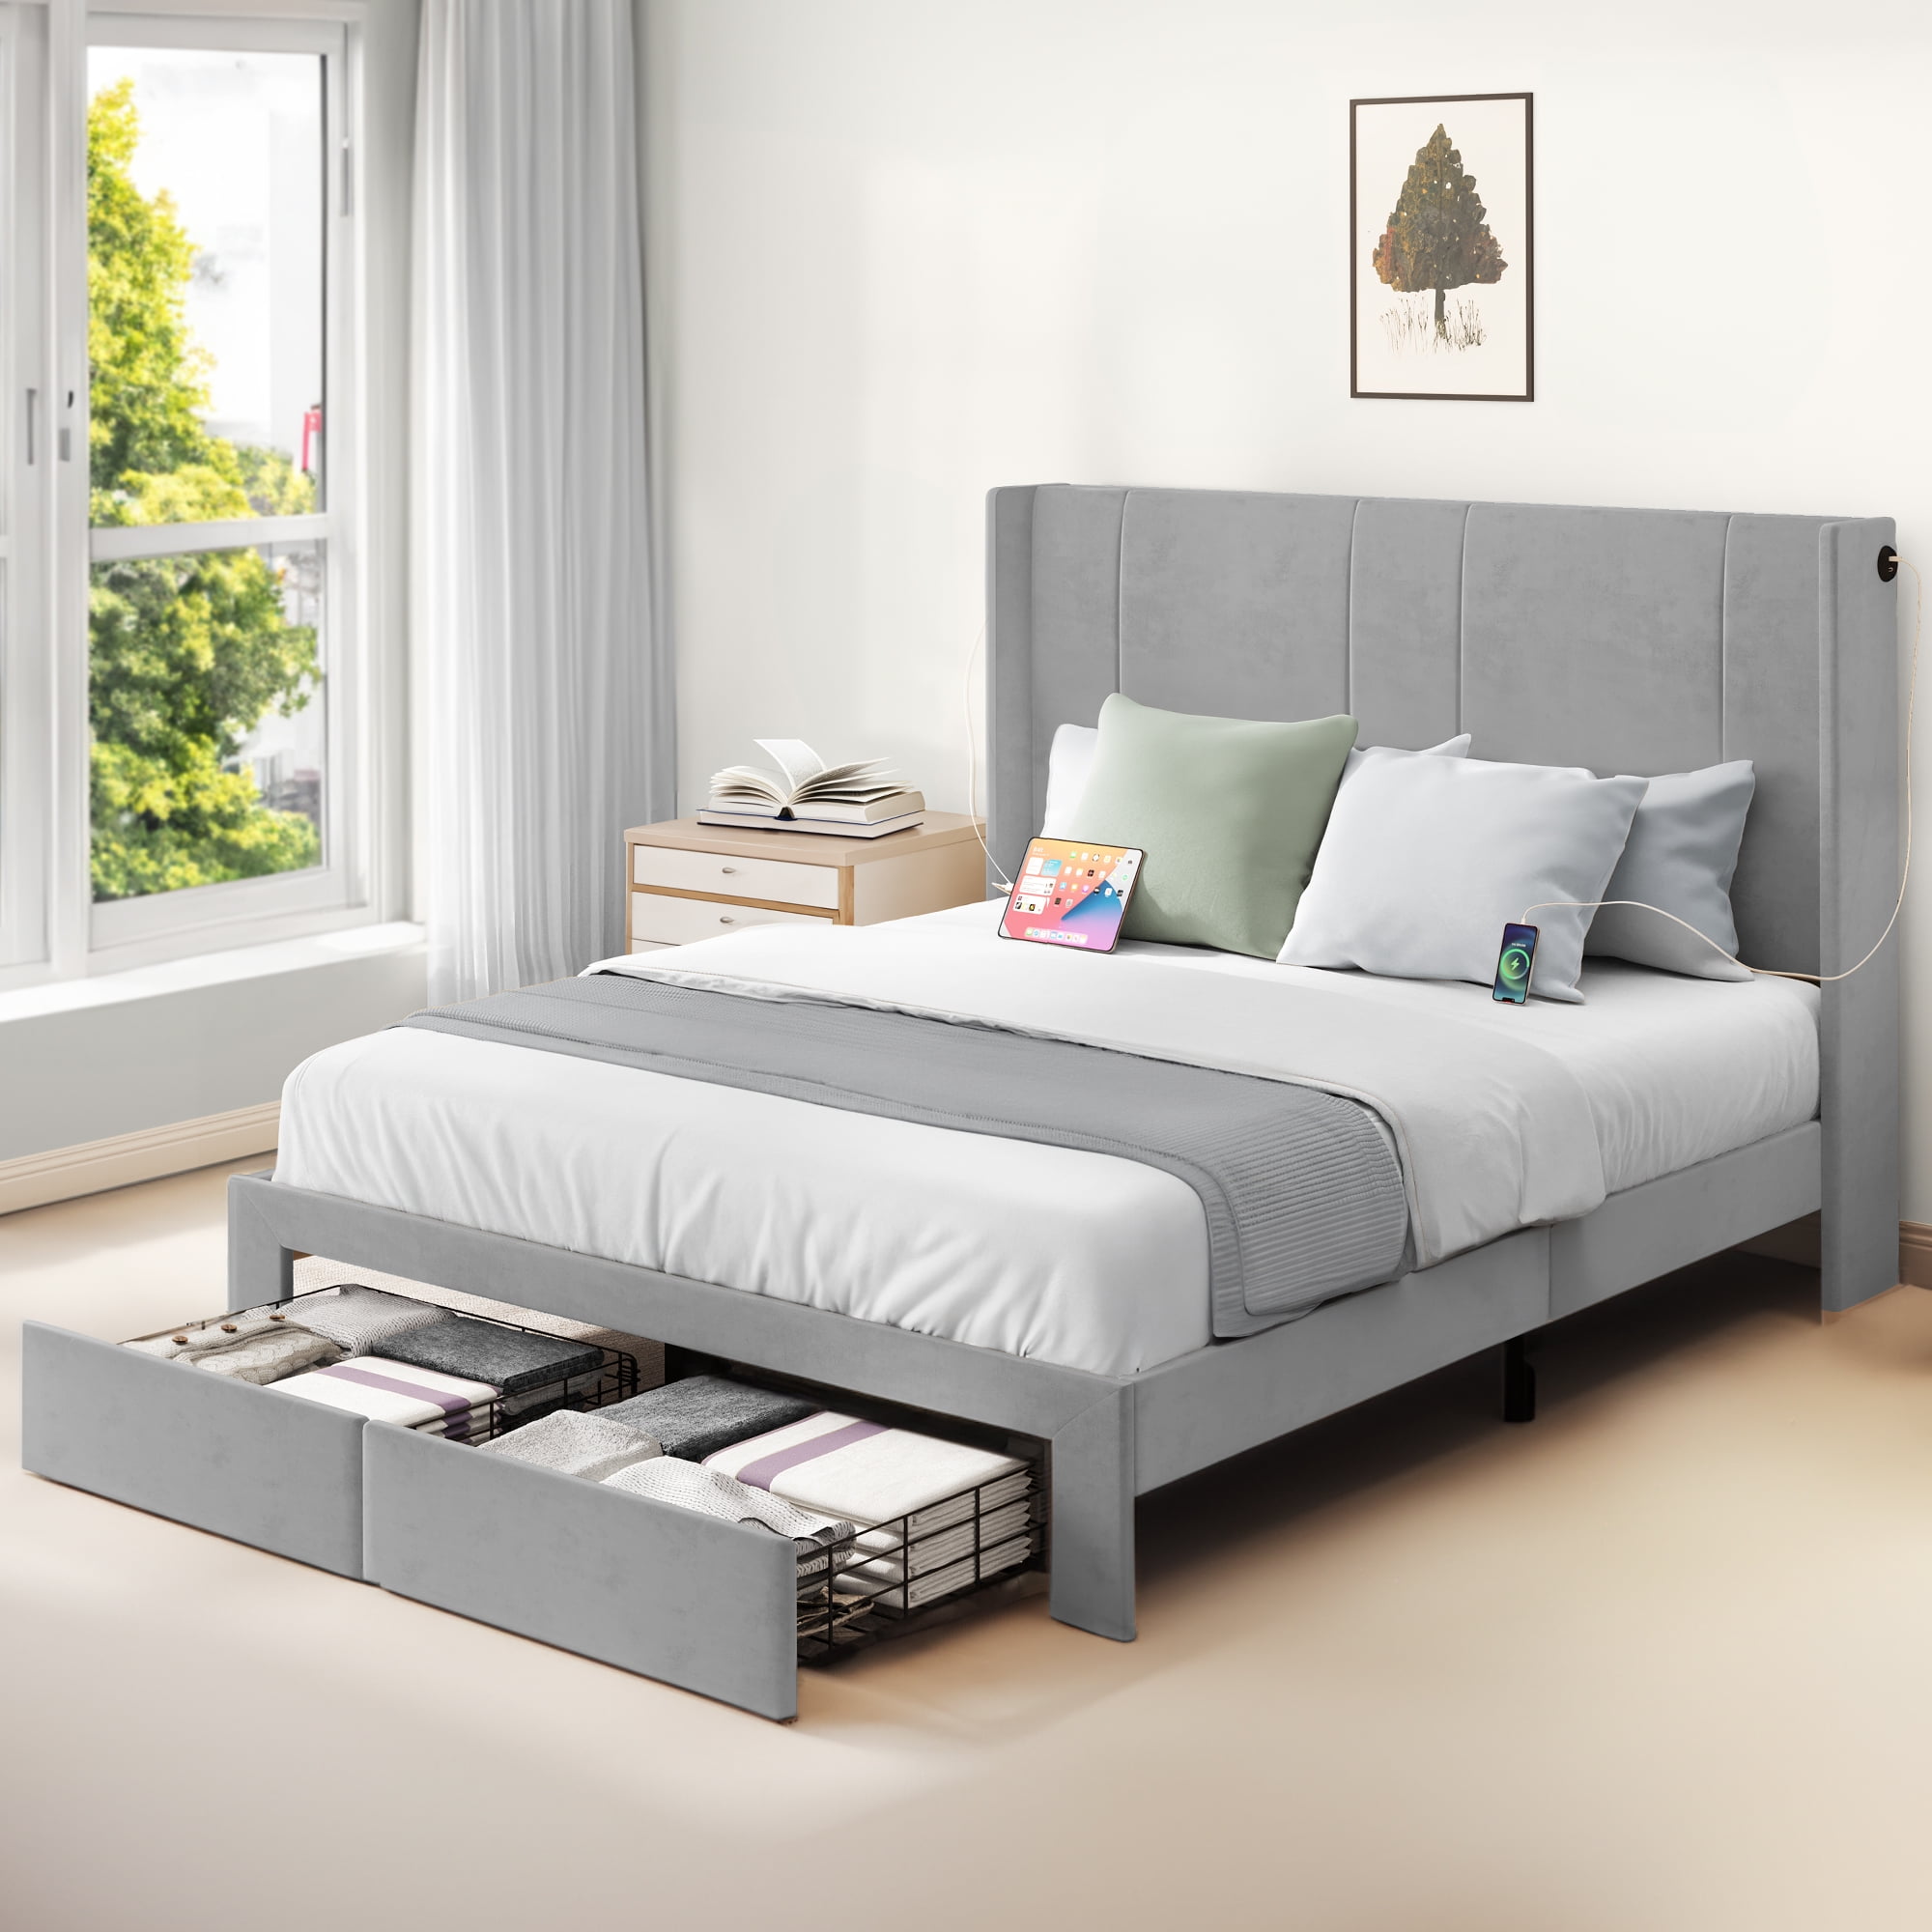 Dextrus Queen Size Upholstered Bed Frame, Platform Bed Frame with ...